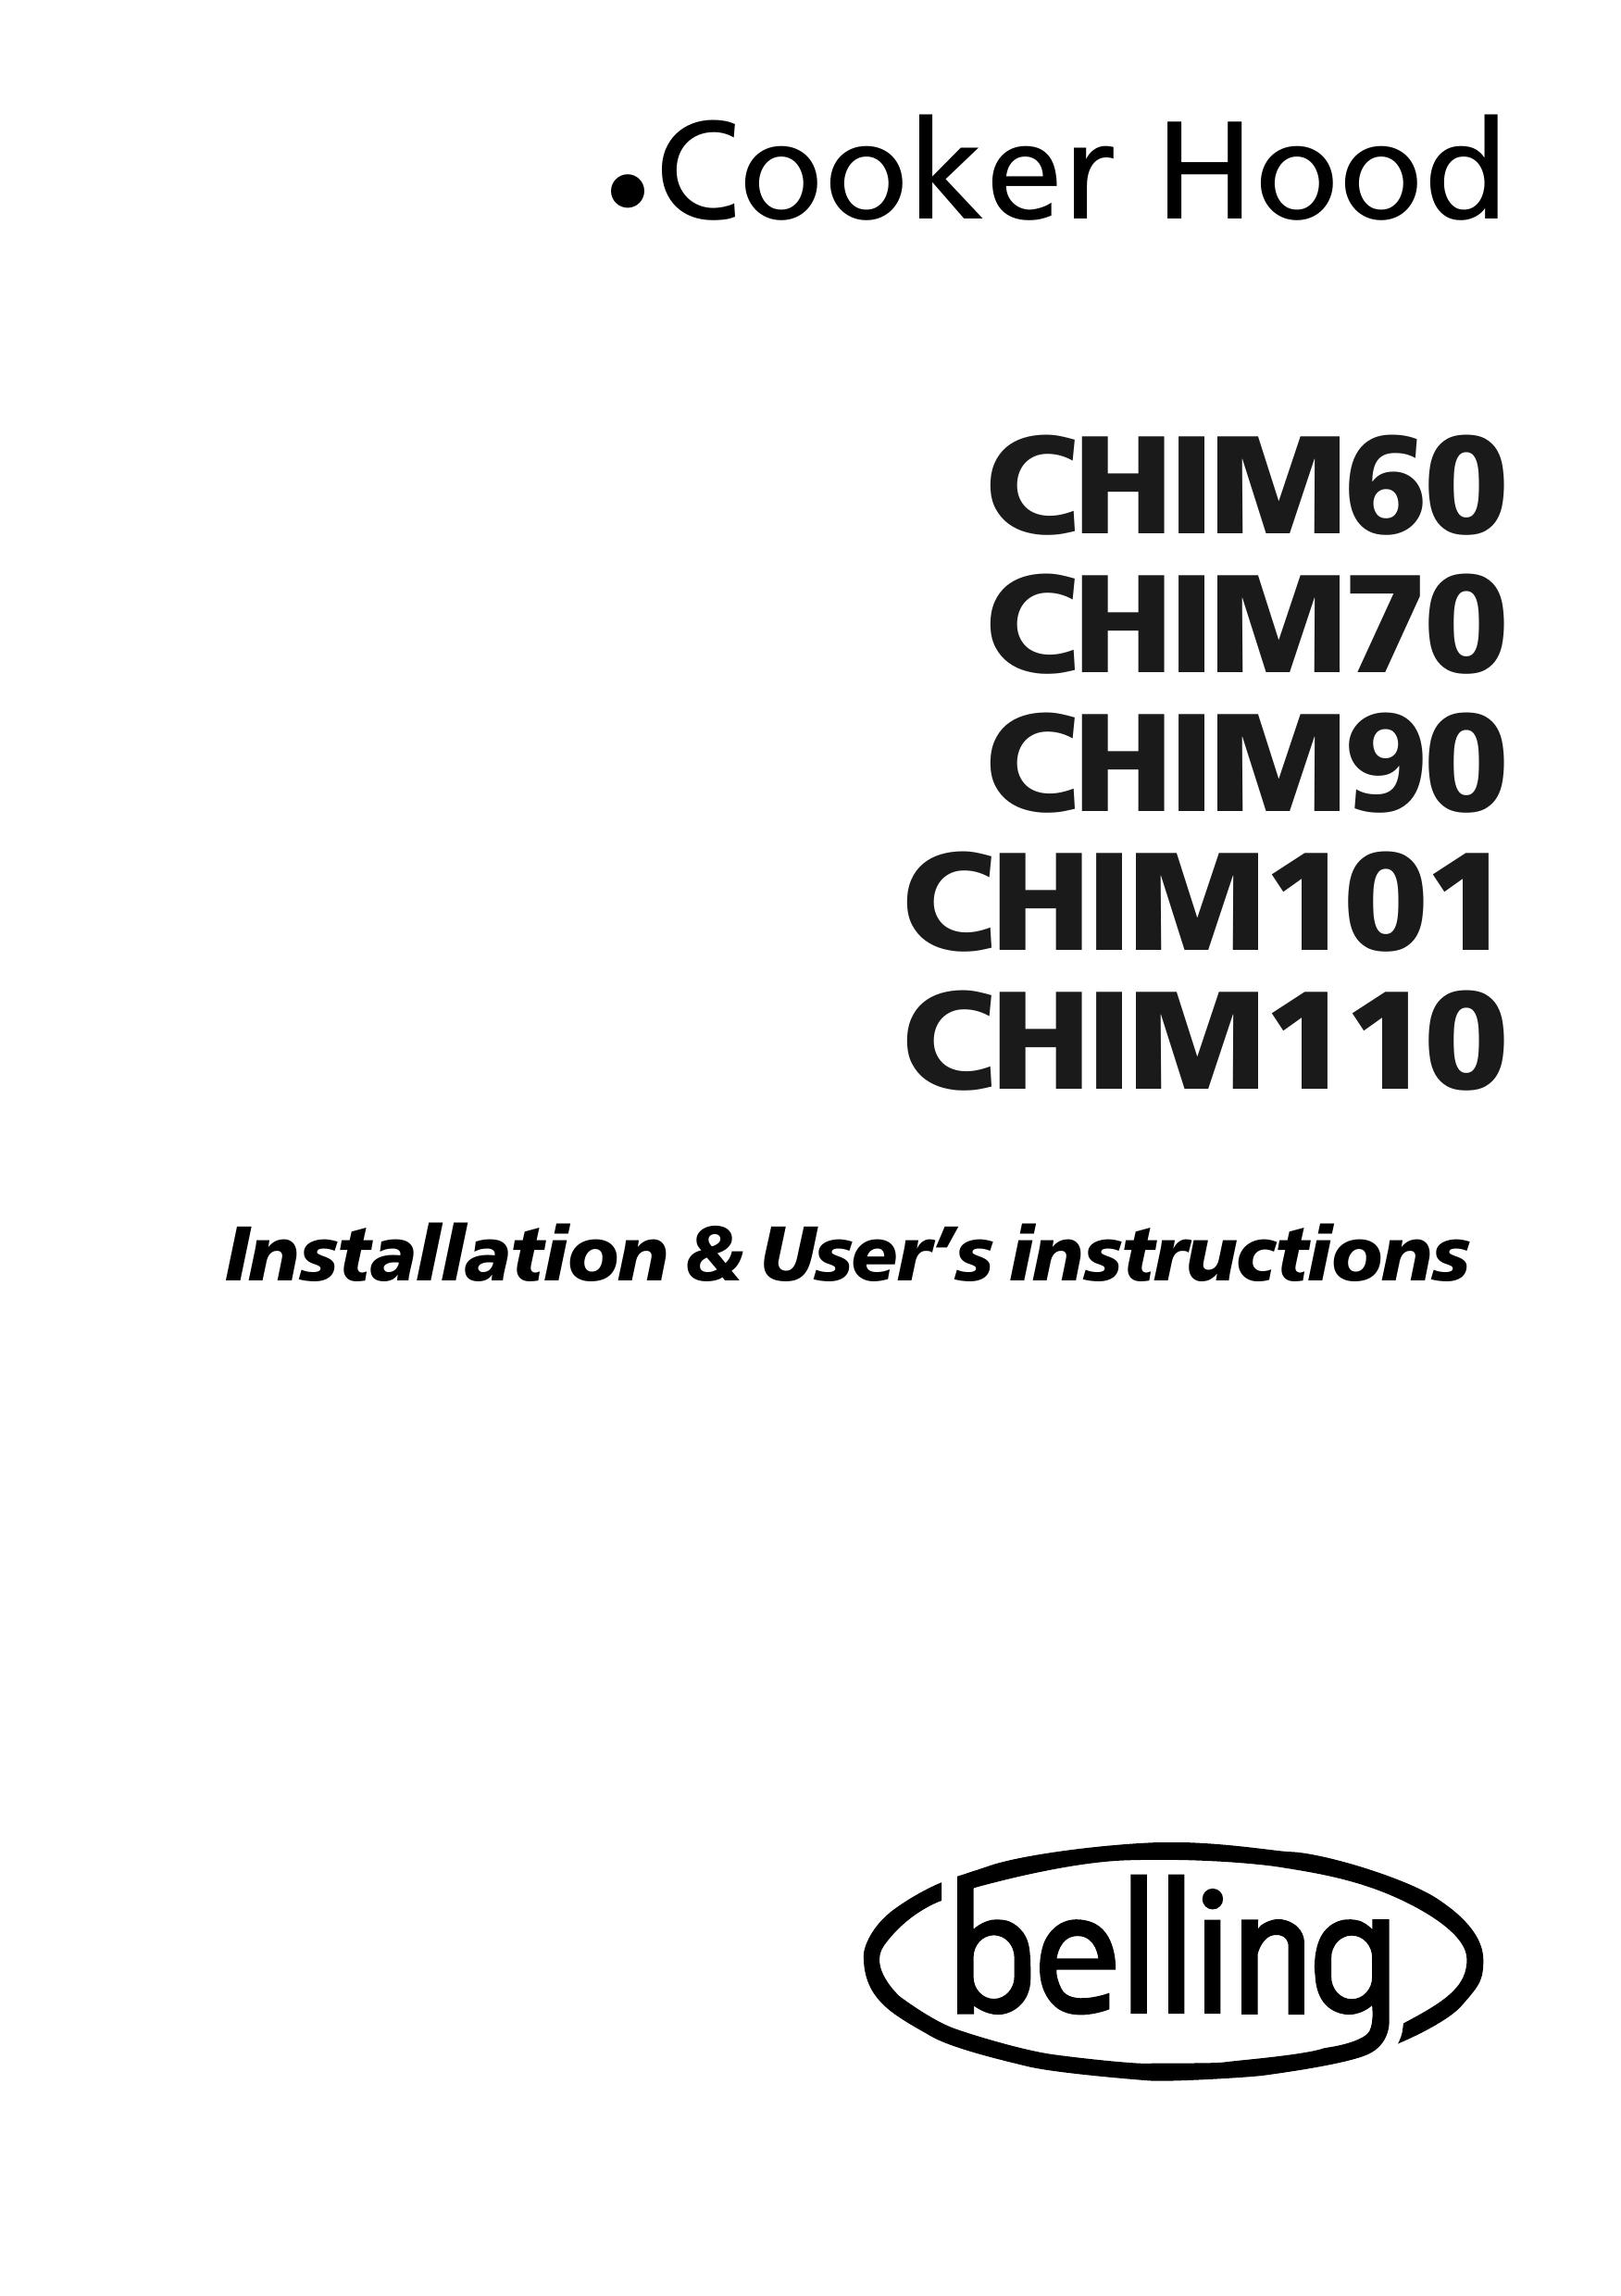 Glen Dimplex Home Appliances Ltd CHIM119 Ventilation Hood User Manual